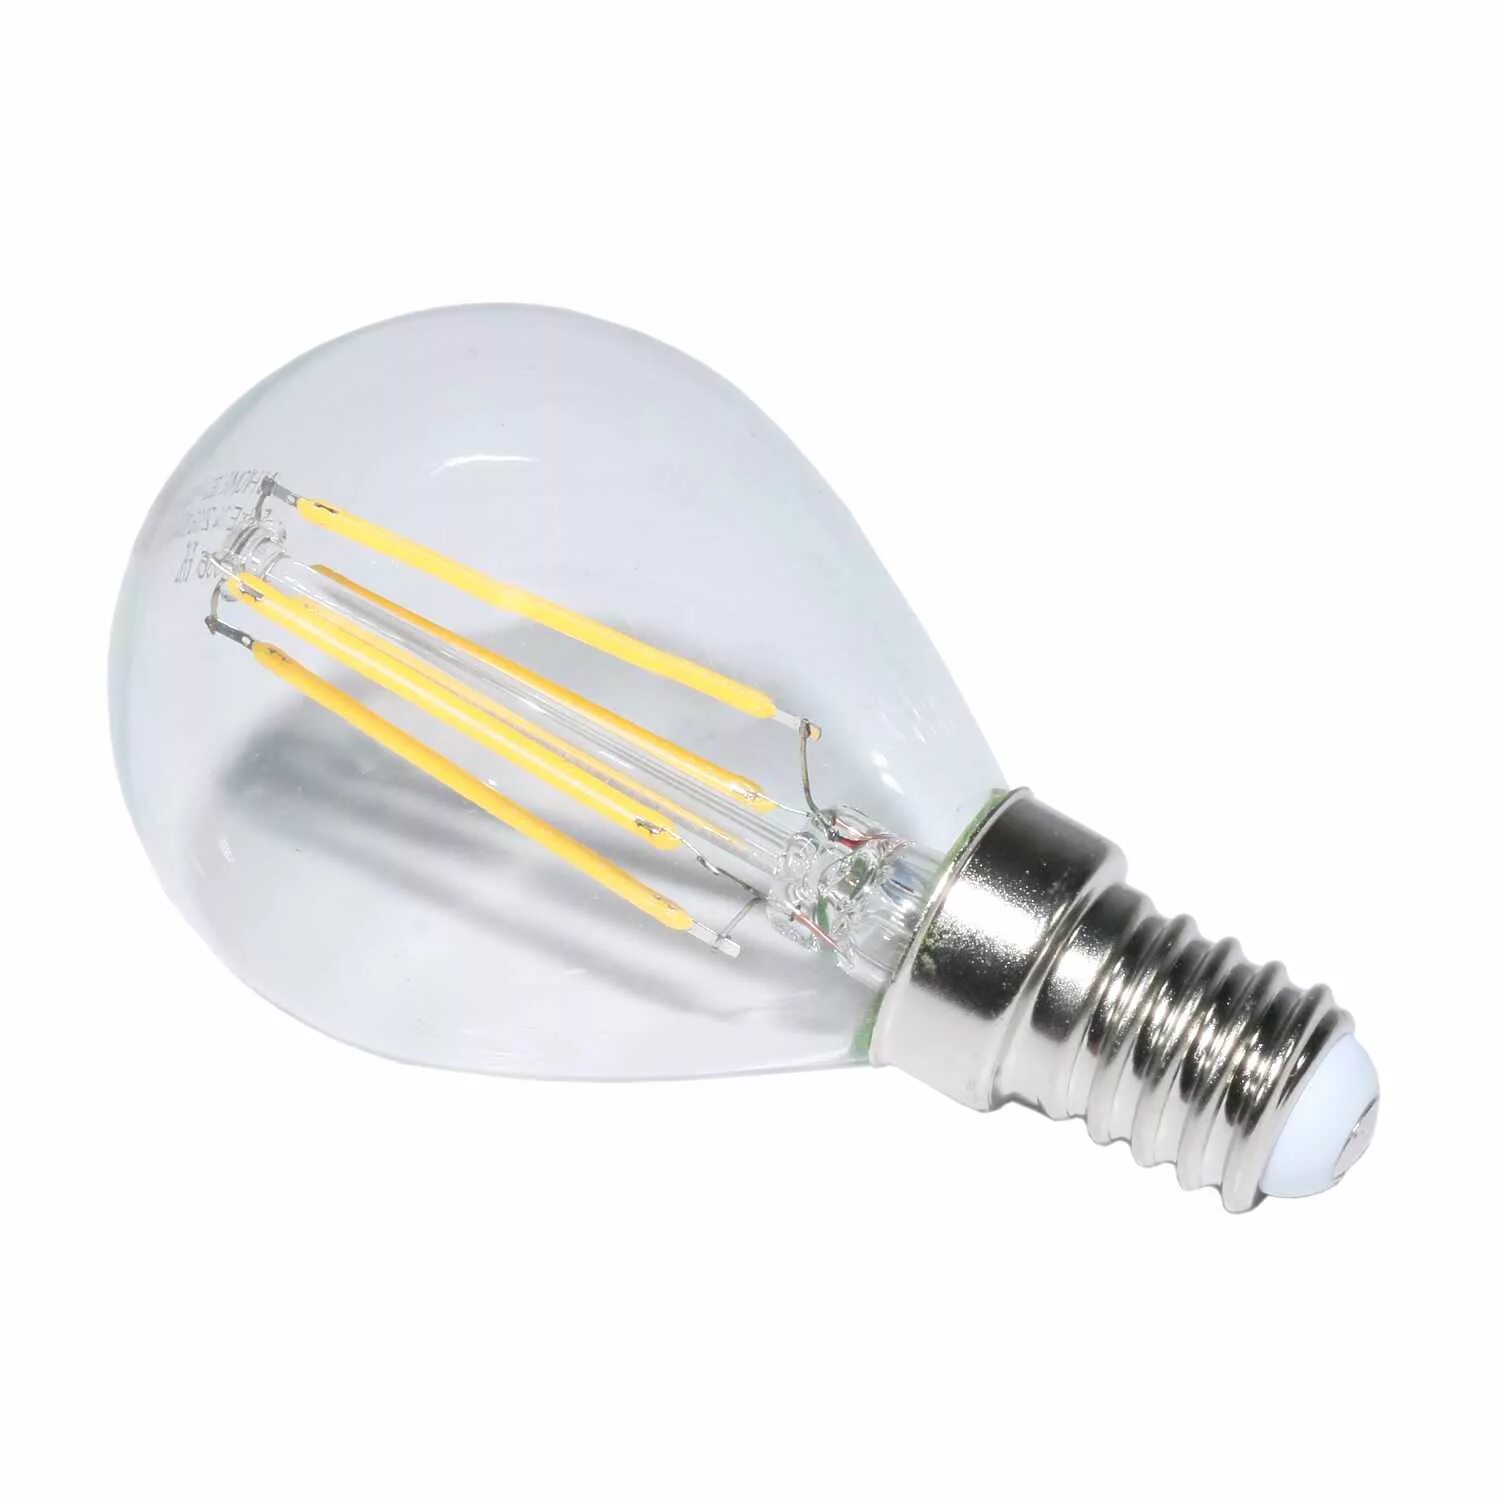 Светодиодные лампы e14 шар. Светодиодная лампа е14 15 Вт. Светодиодная лампа 5вт с цоколем е14. ASD led-шар e14 3.5 Вт 3000к. Лампочки цоколь е14 светодиодные.